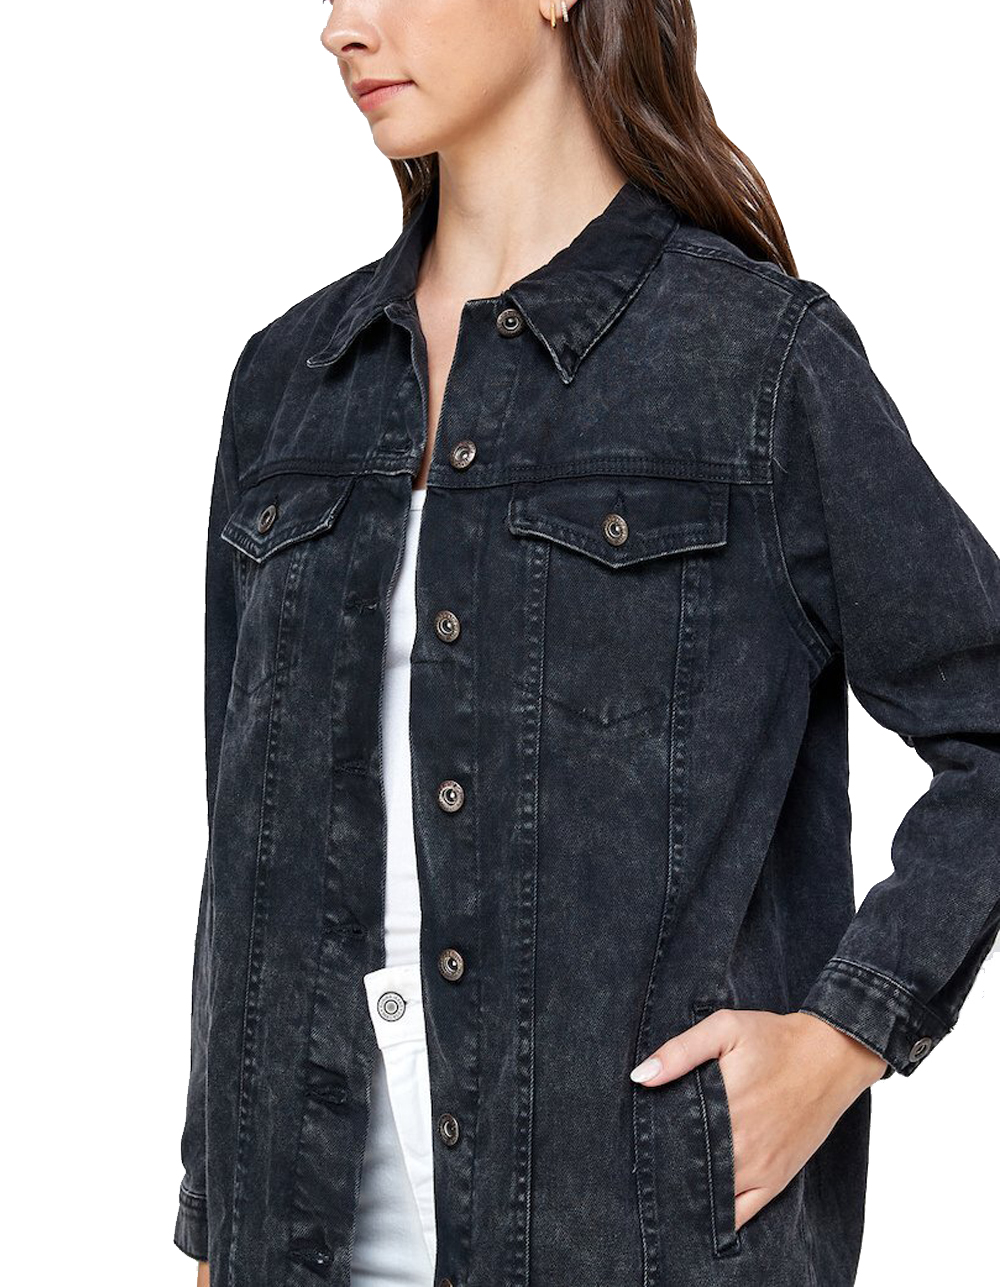 Women's Long Casual Maxi Length Denim Cotton Coat Oversize Button Up Jean Jacket (Mineral Black, M) - image 5 of 6